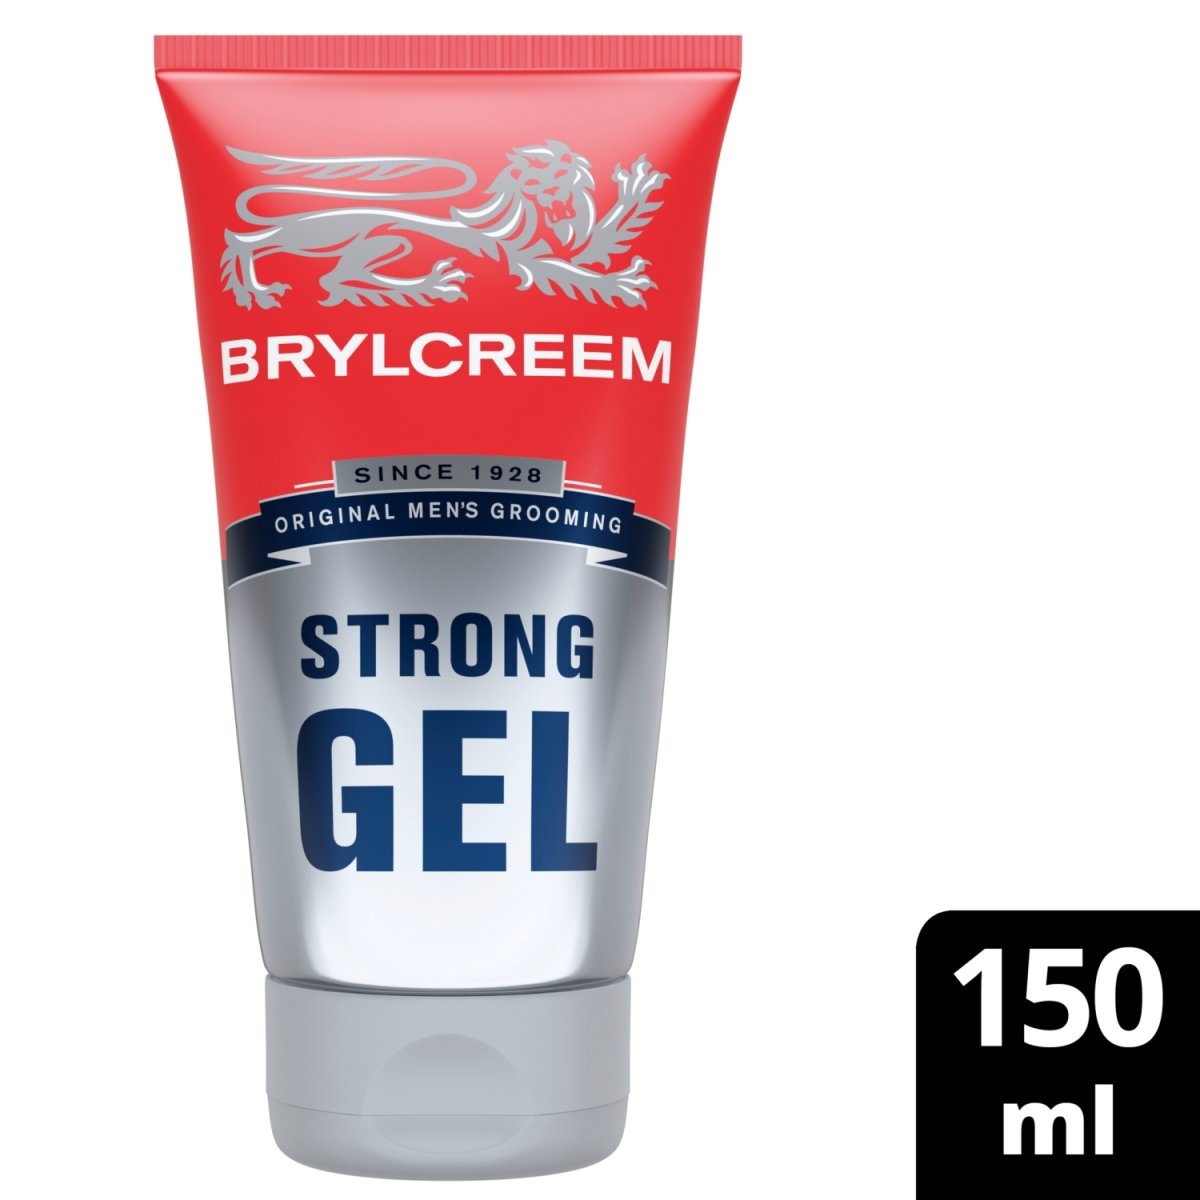 Brylcreem Gel 150ml Strong - Intamarque 5000231008801